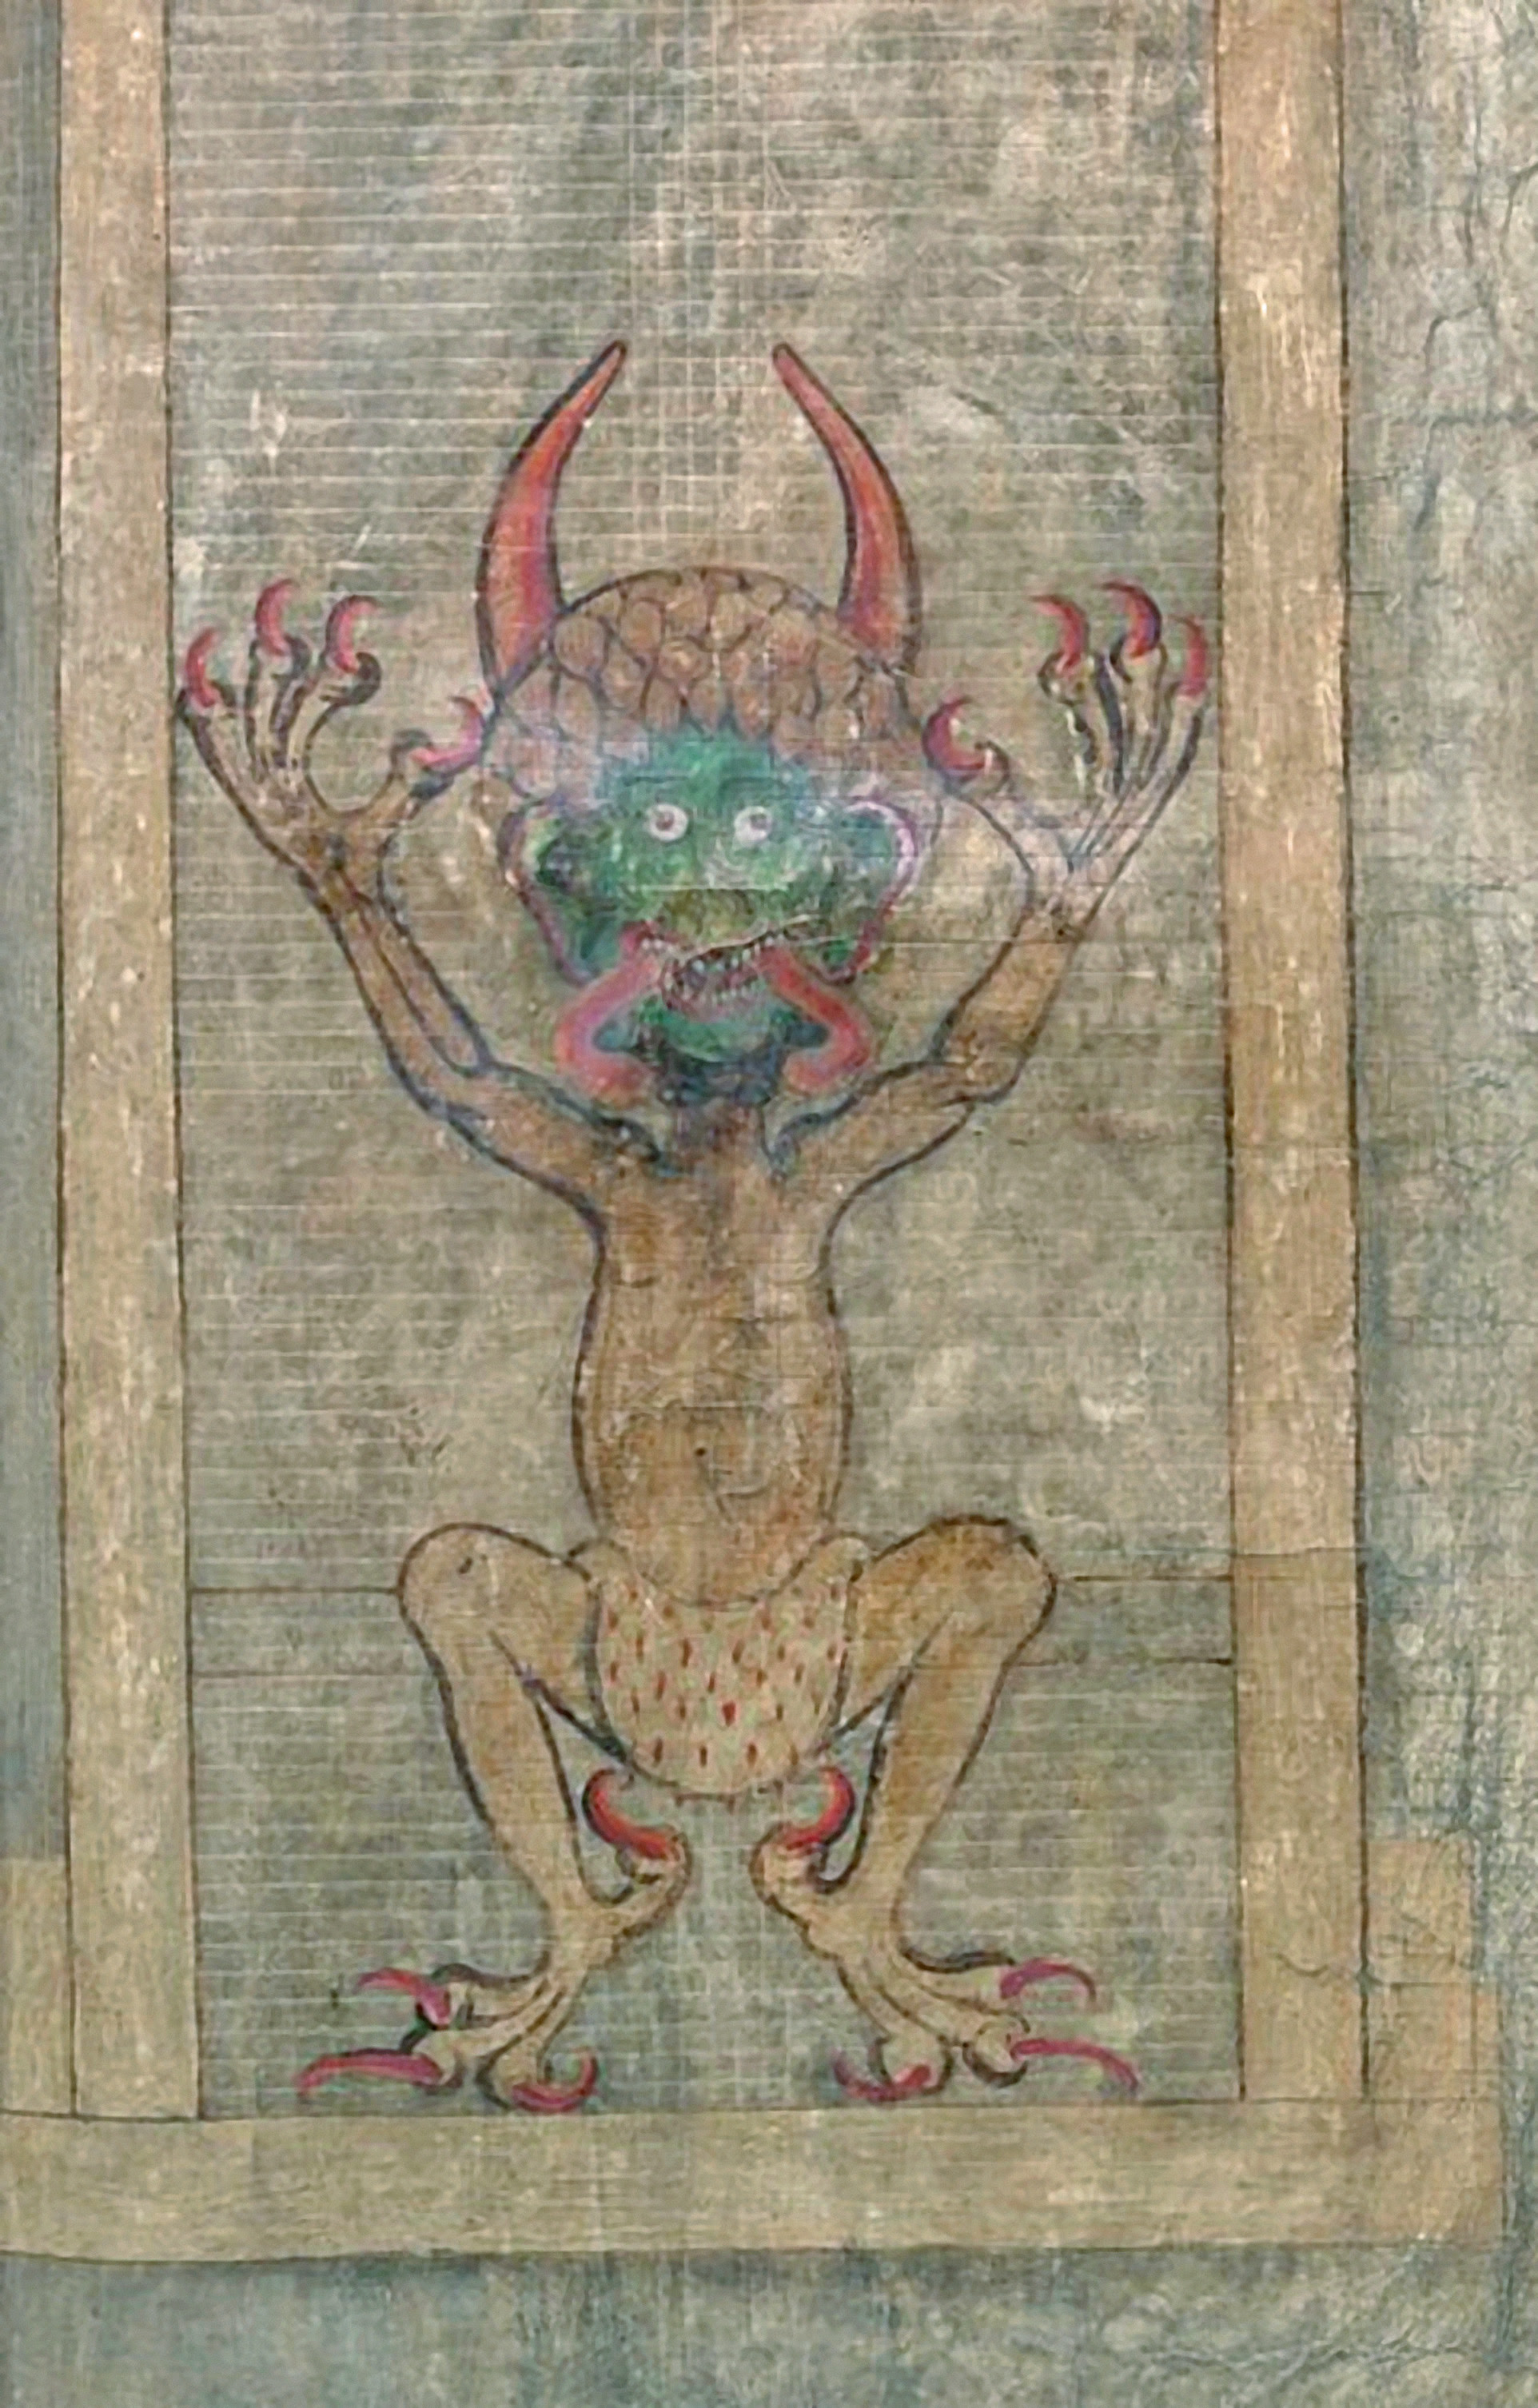 Codex-Gigas-Devil-enhanced.jpg